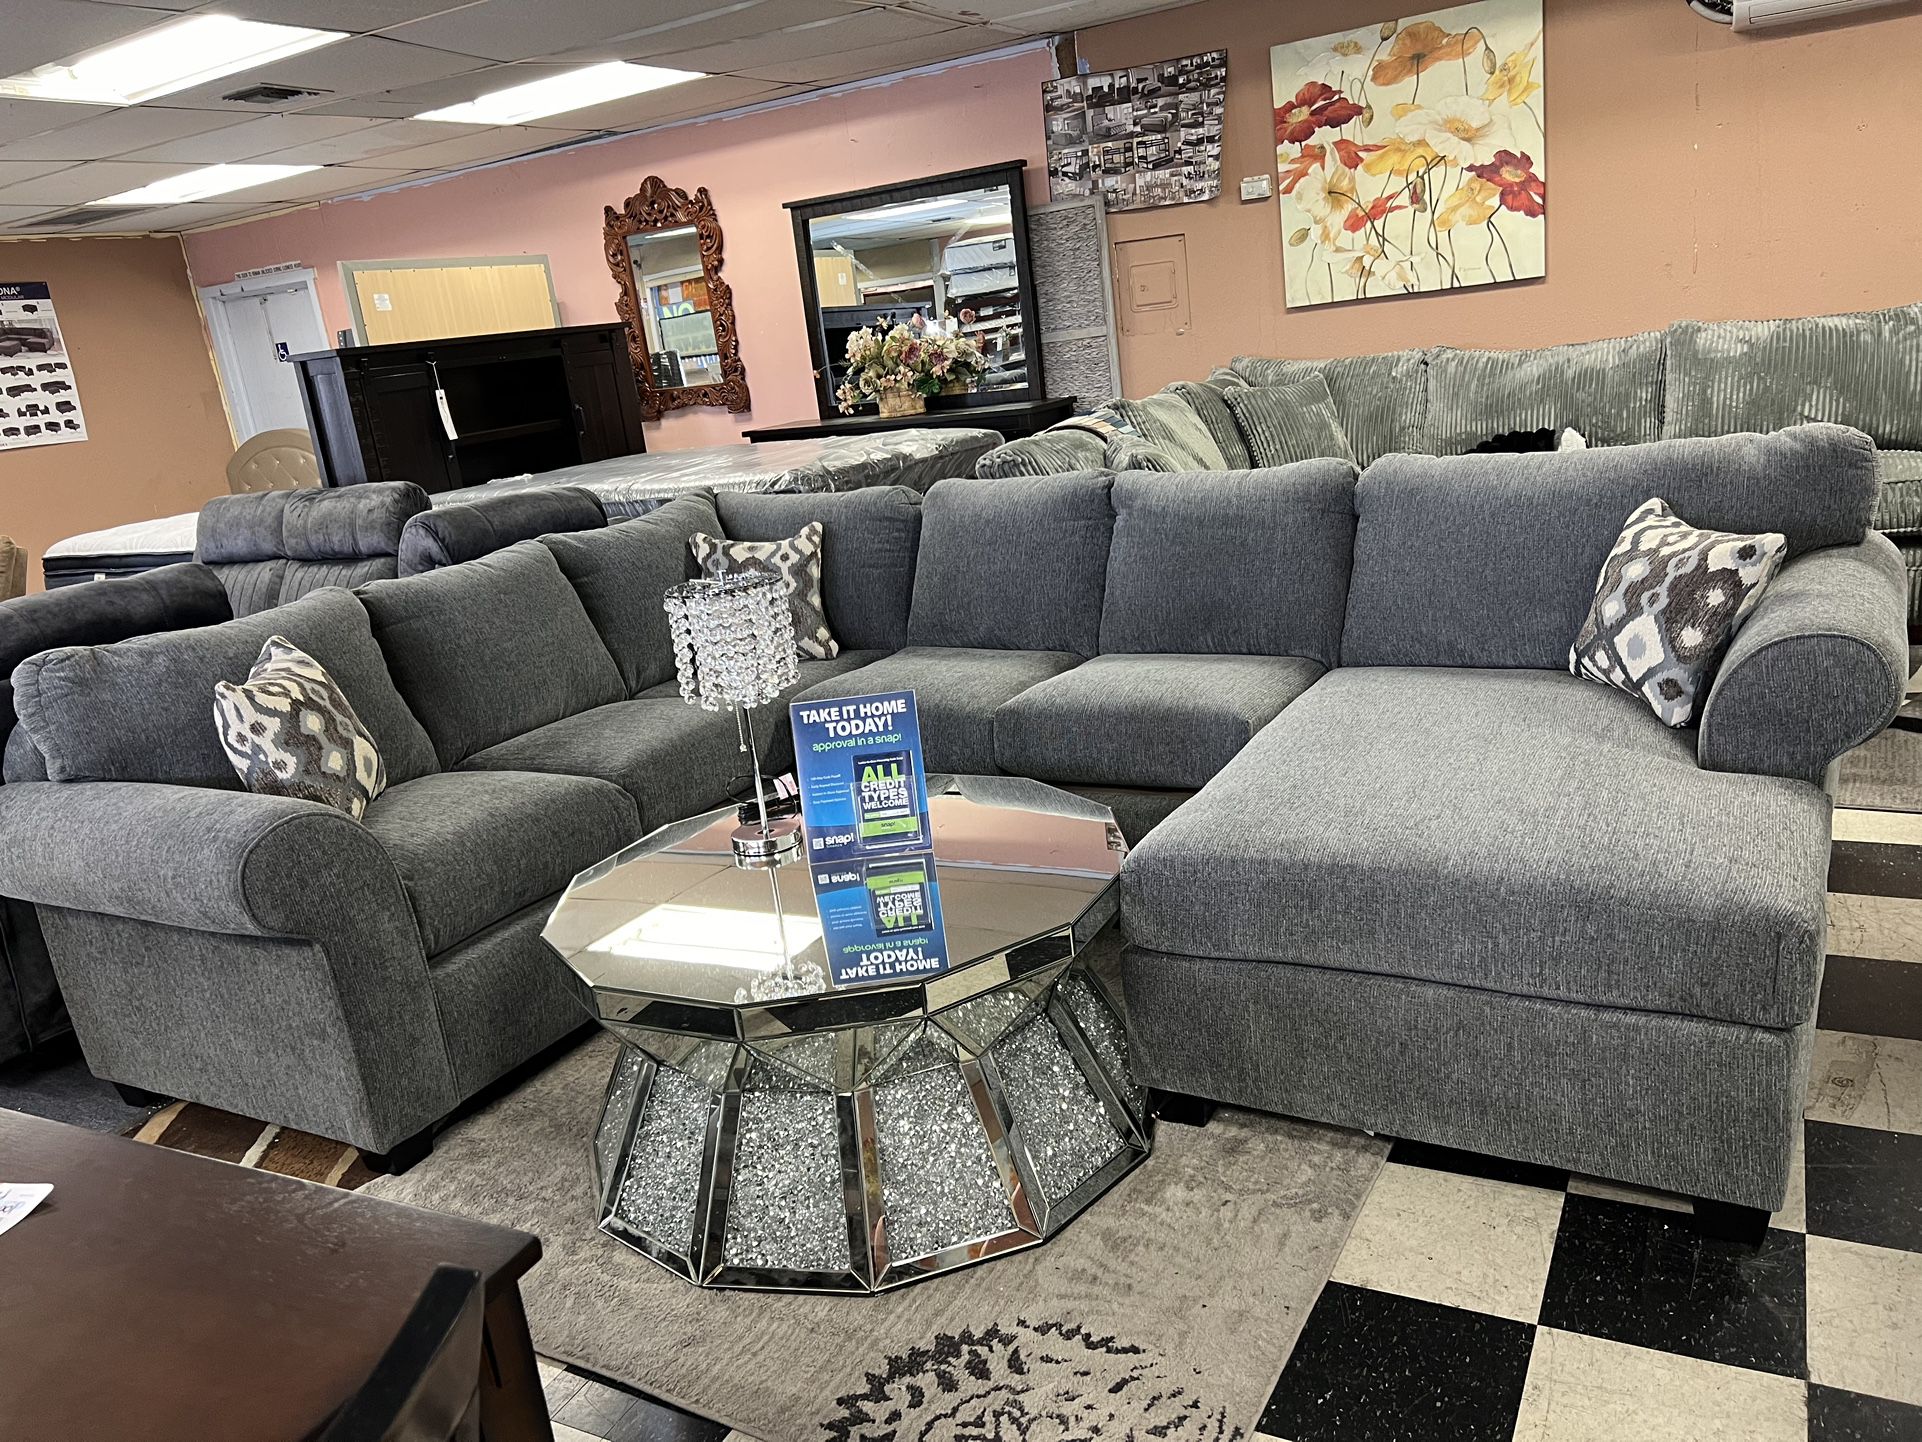 New Sectional Sofa Set American 🇺🇸 Hemet San Jacinto 